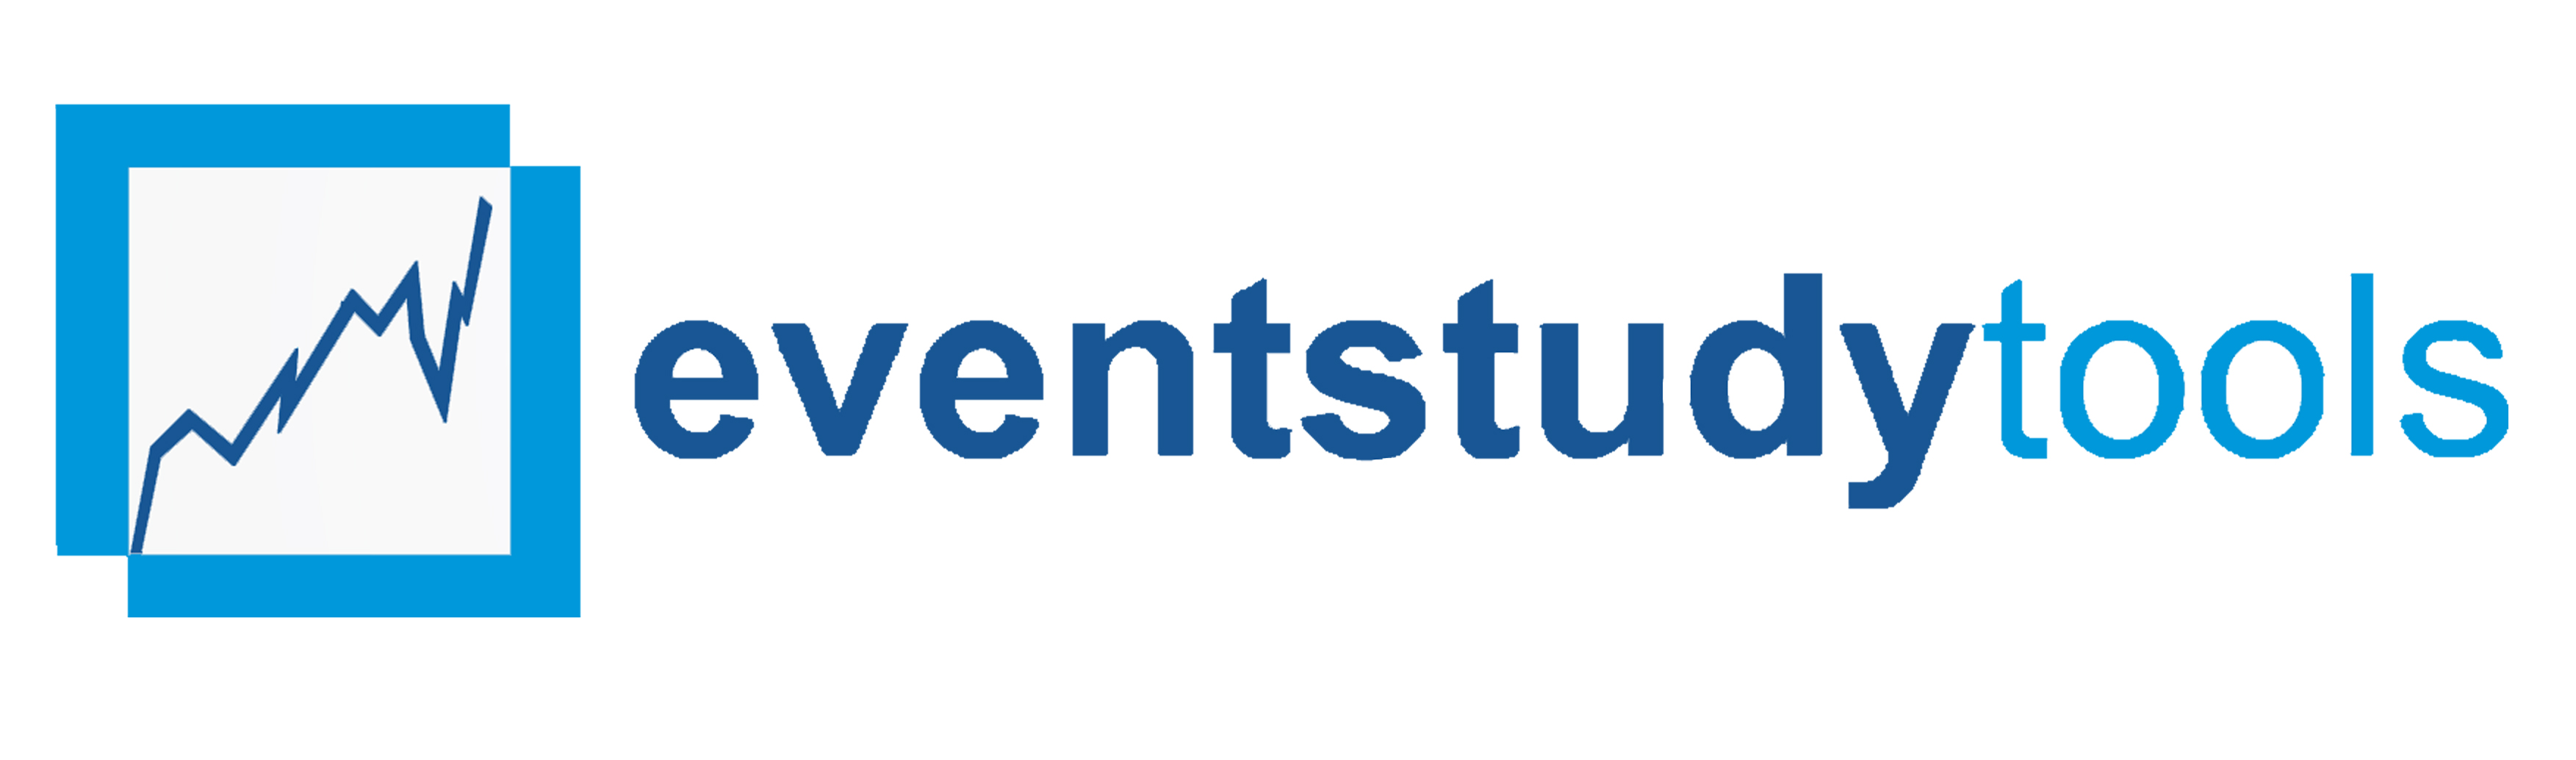 EventStudyTools logo